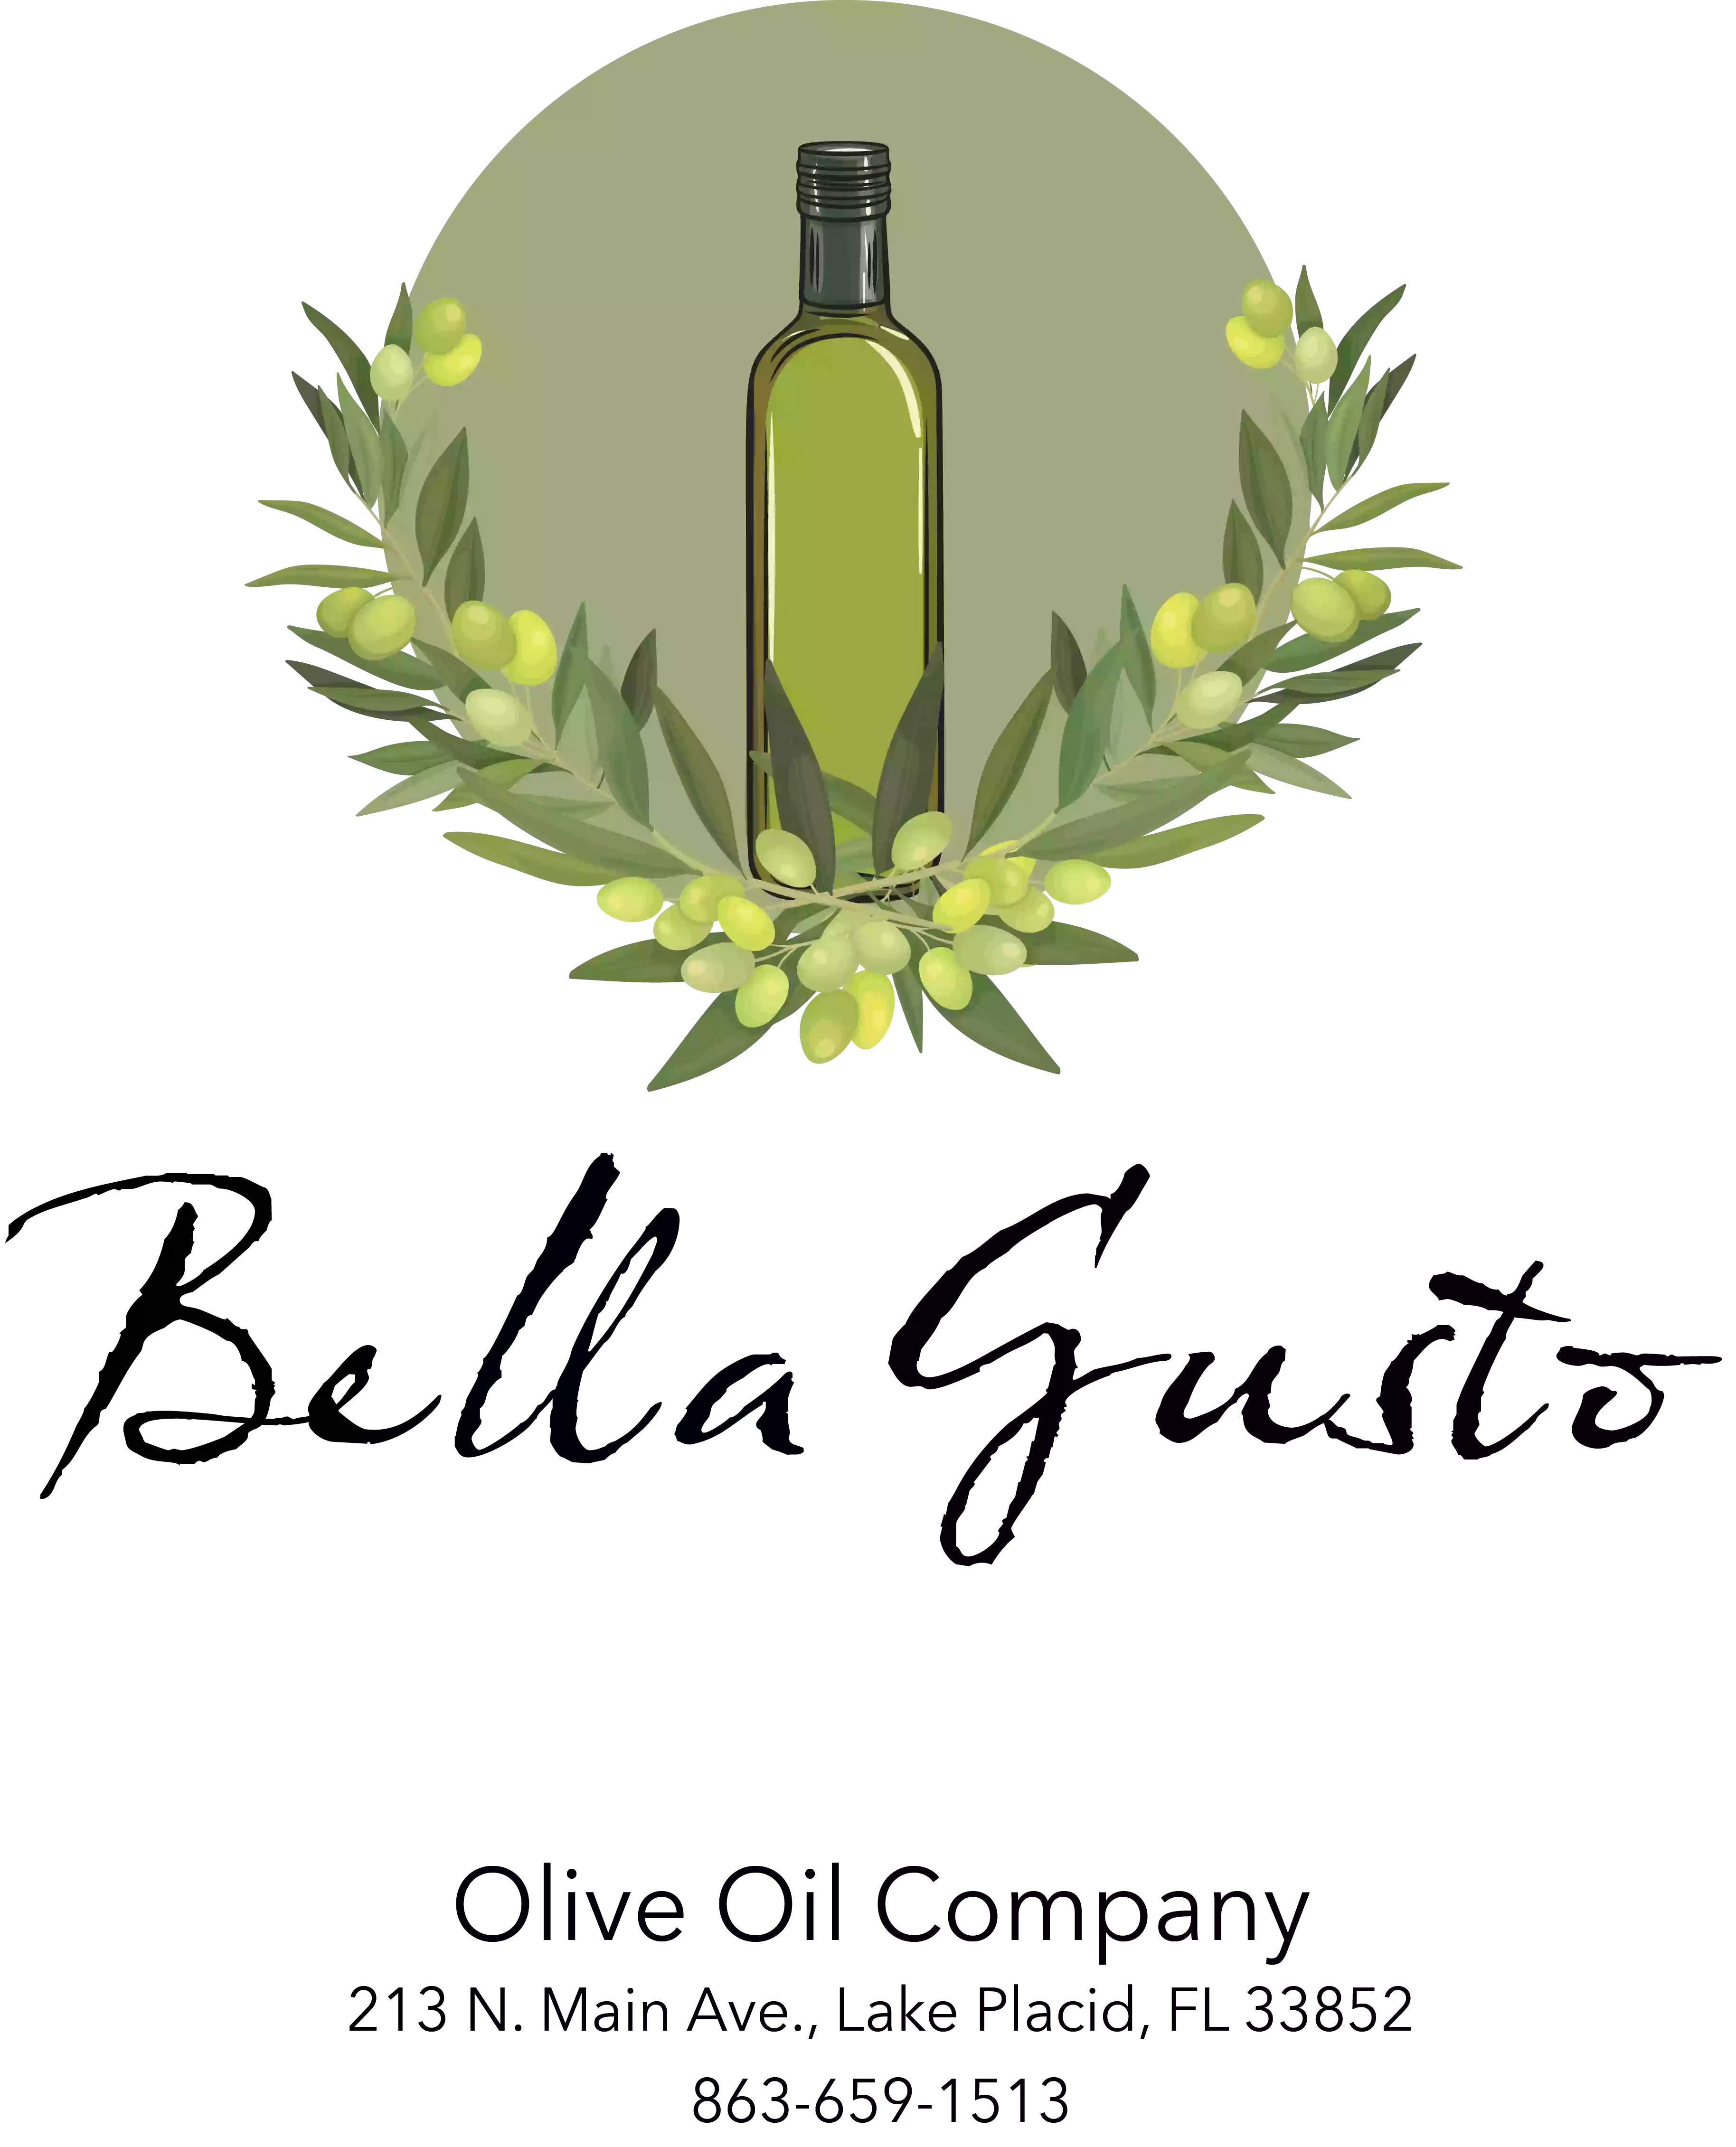 Bella Gusto olive oil Co